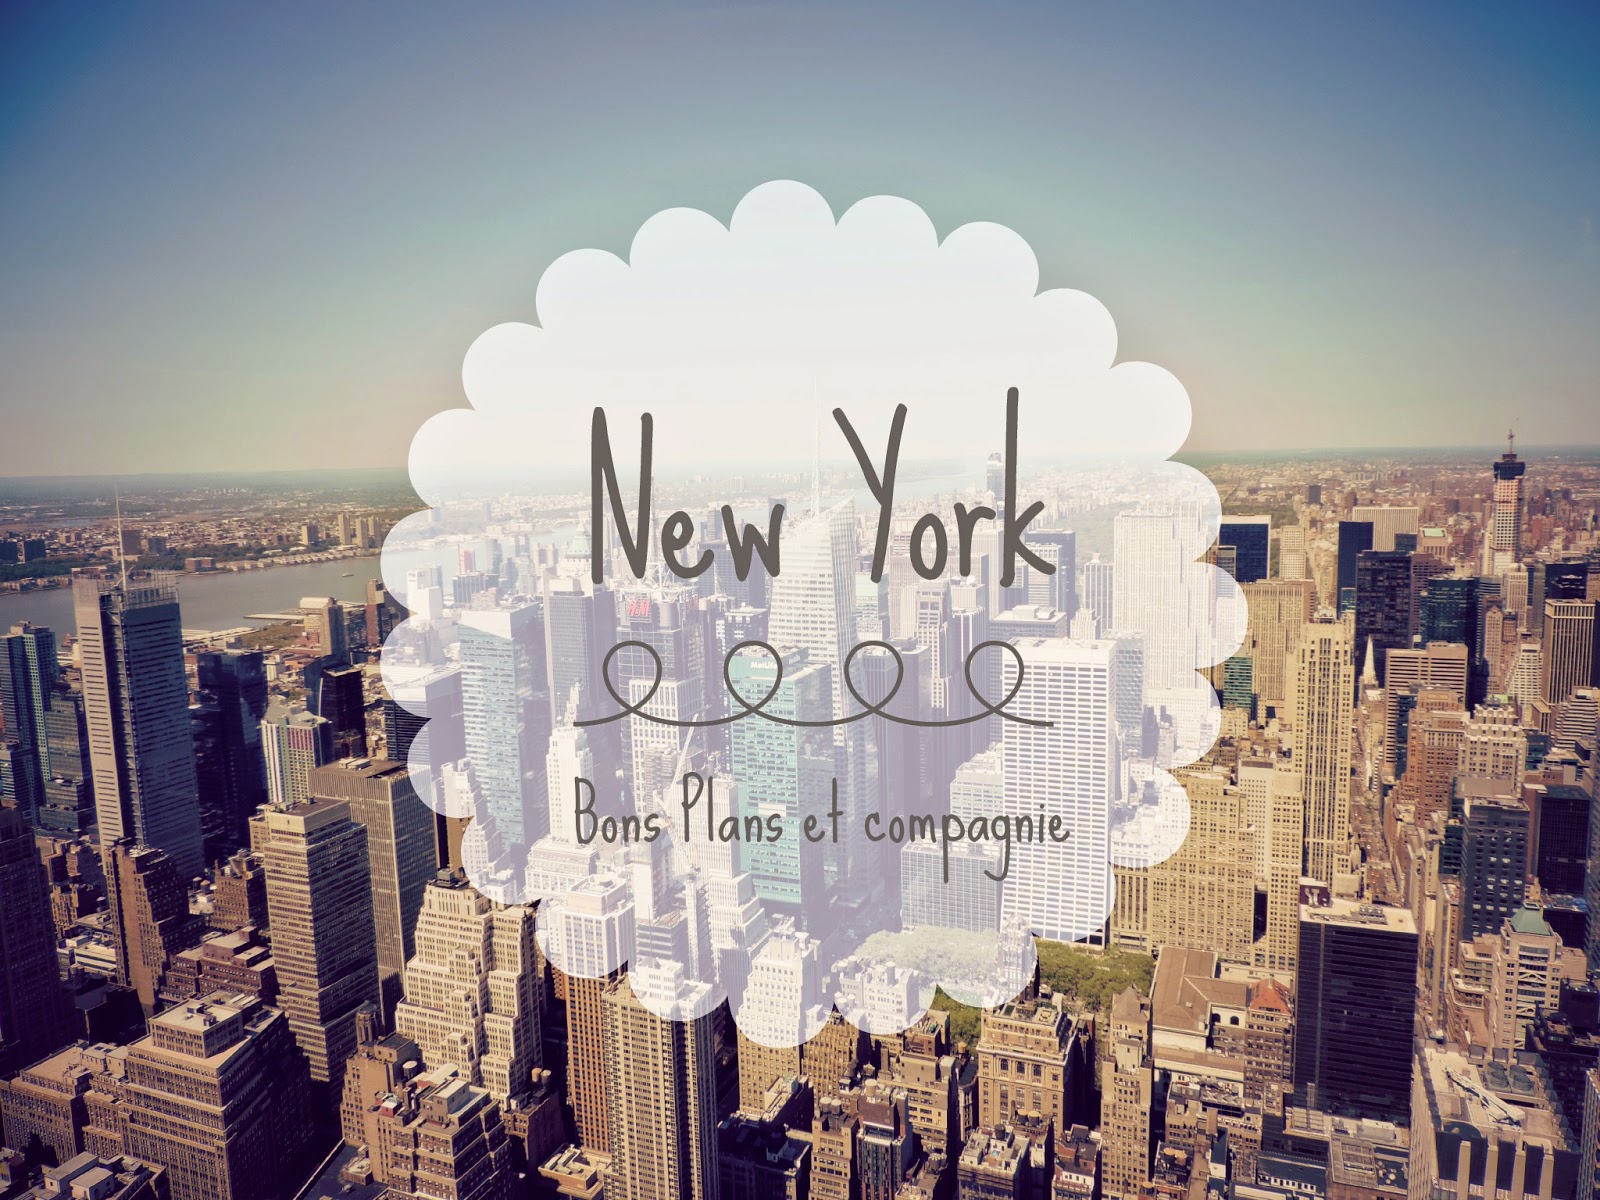 http://mynameisgeorges.blogspot.com/2014/06/new-york-new-york-bons-plans-et-conseils.html